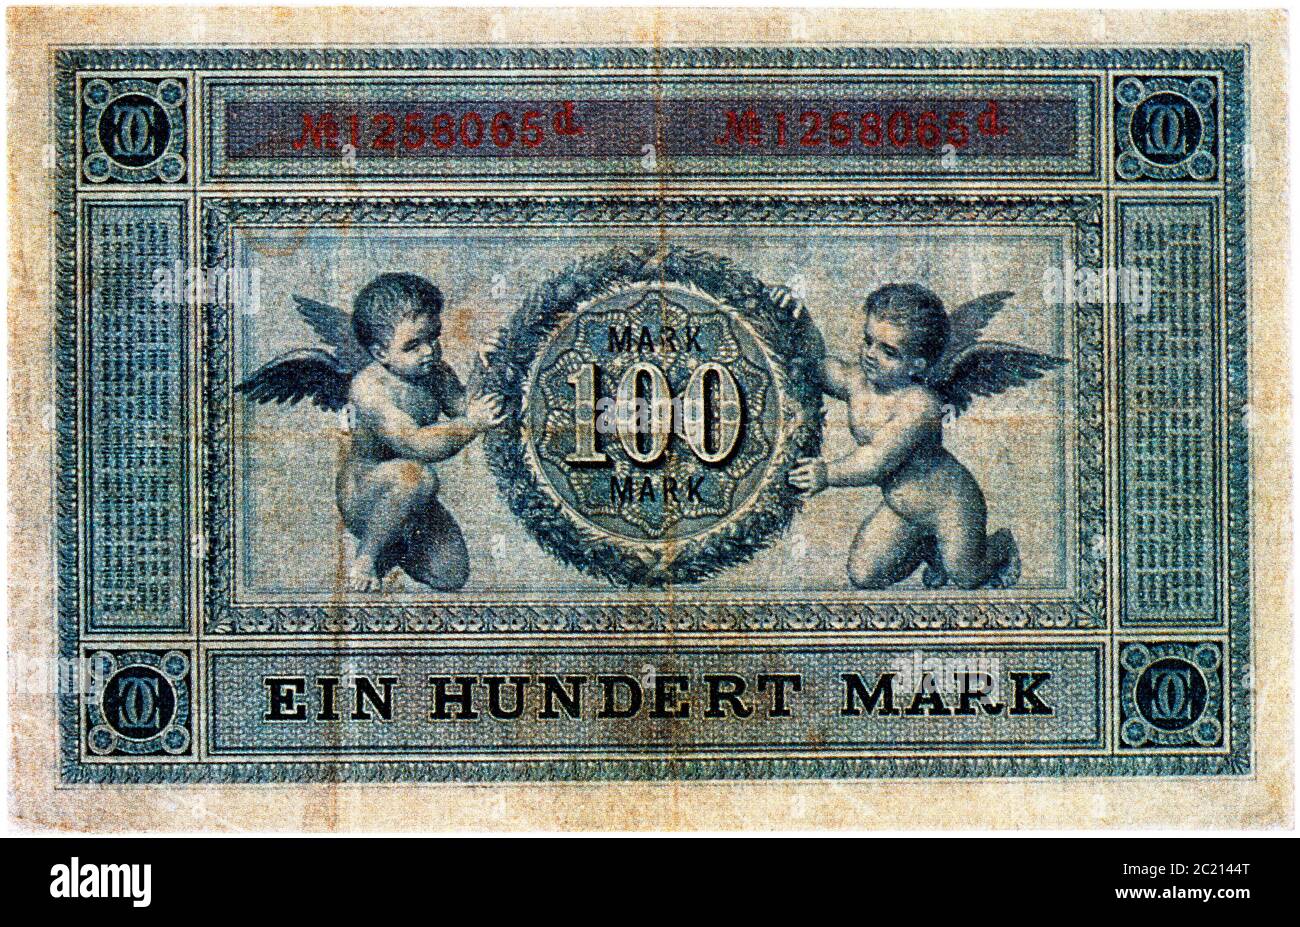 Historische Banknote, 1. Januar 1876, Hundert Mark, Deutschland Stock Photo